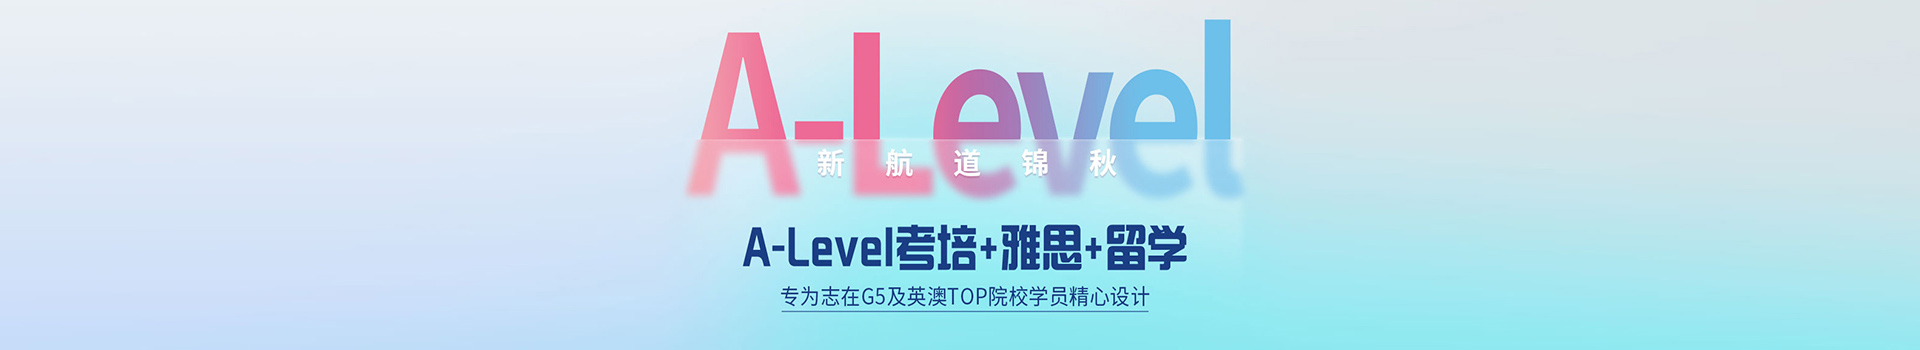 北京新航道A-Level课程